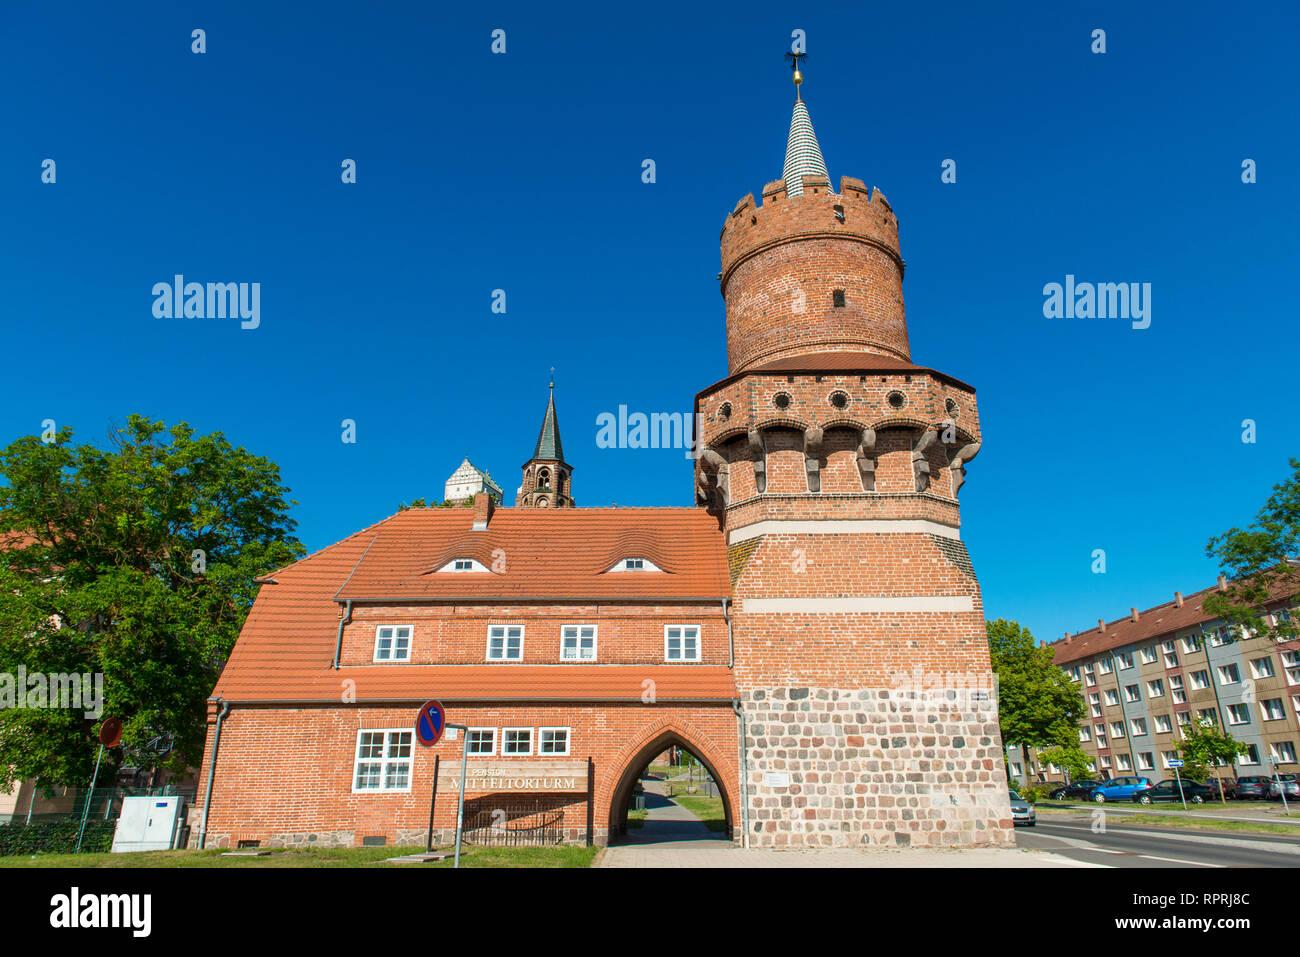 Tower at the city wall Mitteltorturm, Prenzlau, Uckermark, Brandenburg, Germany Stock Photo